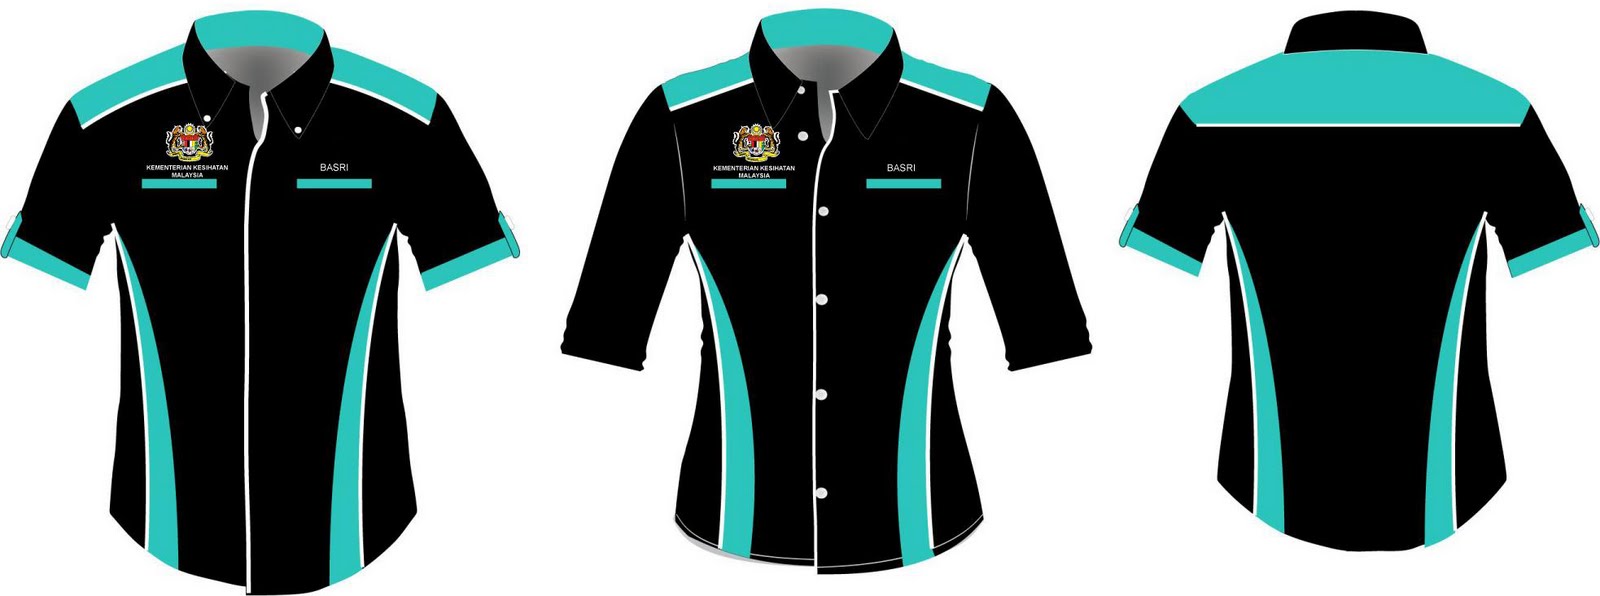 Design F1 Shirt HKL  Corporate Shirts